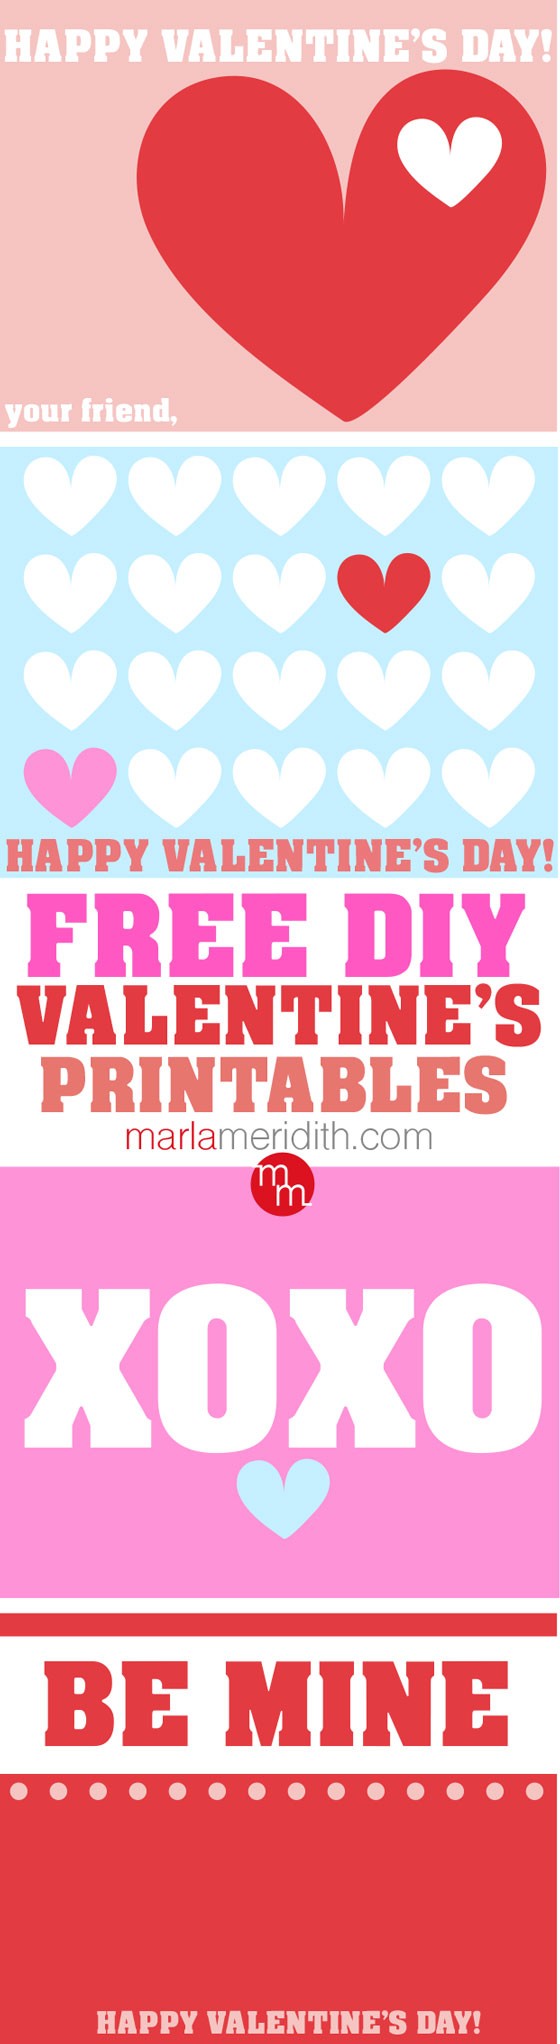 Free DIY Valentine’s Printables | MarlaMeridith.com @MarlaMeridith